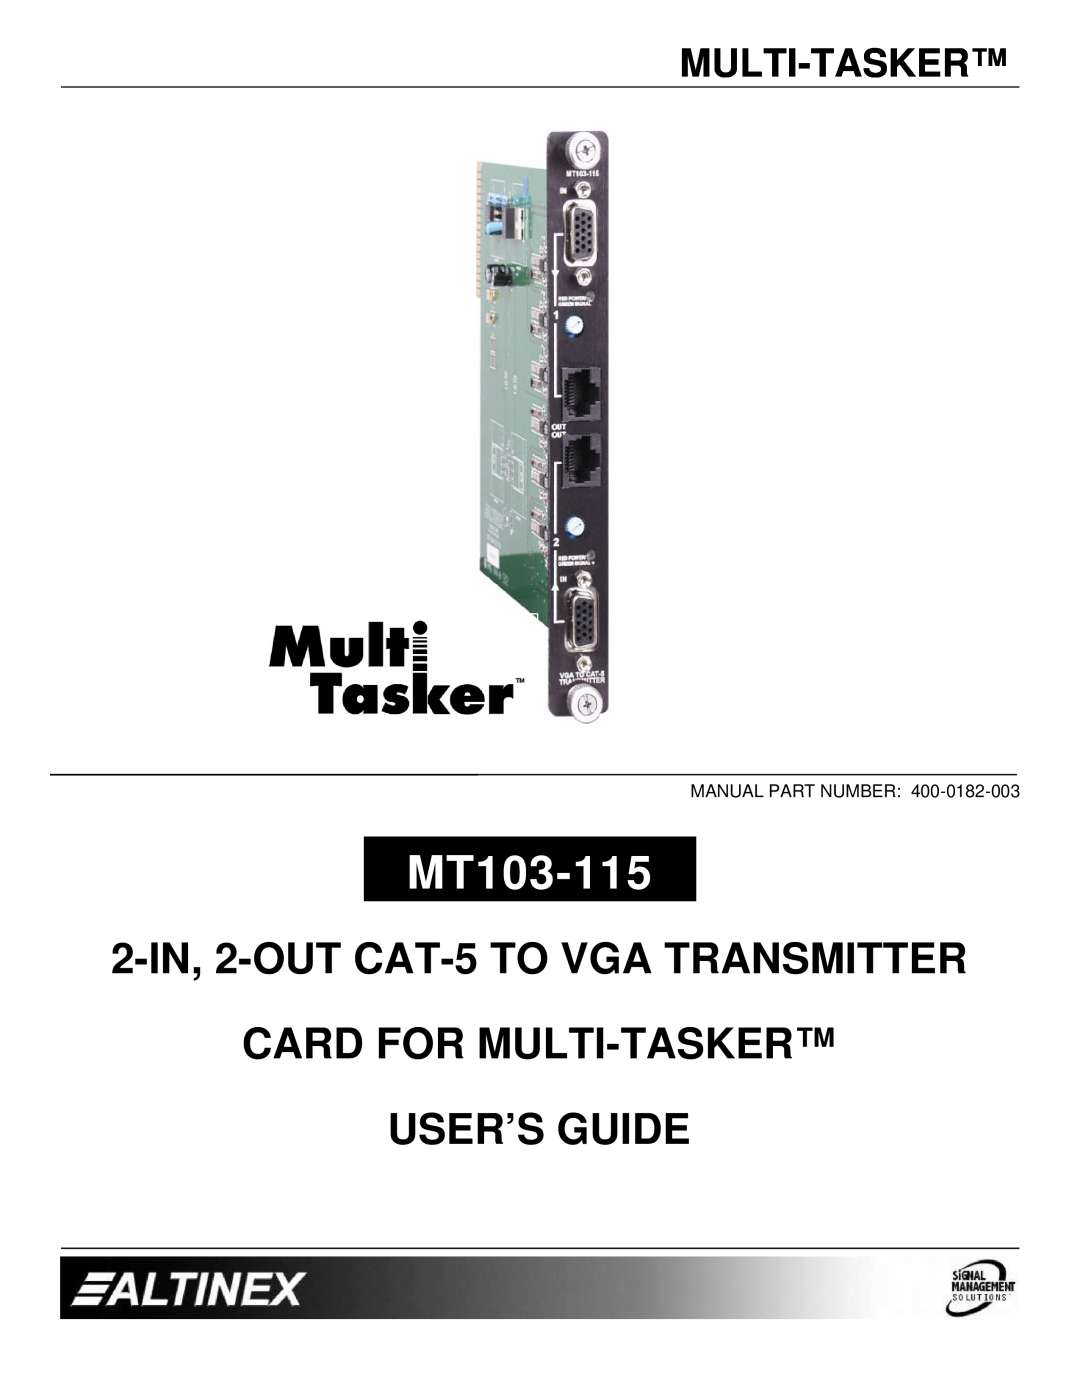 Altinex MT103-115 manual Multi-Tasker, 2-IN, 2-OUT CAT-5 TO VGA TRANSMITTER CARD FOR MULTI-TASKER, User’S Guide 